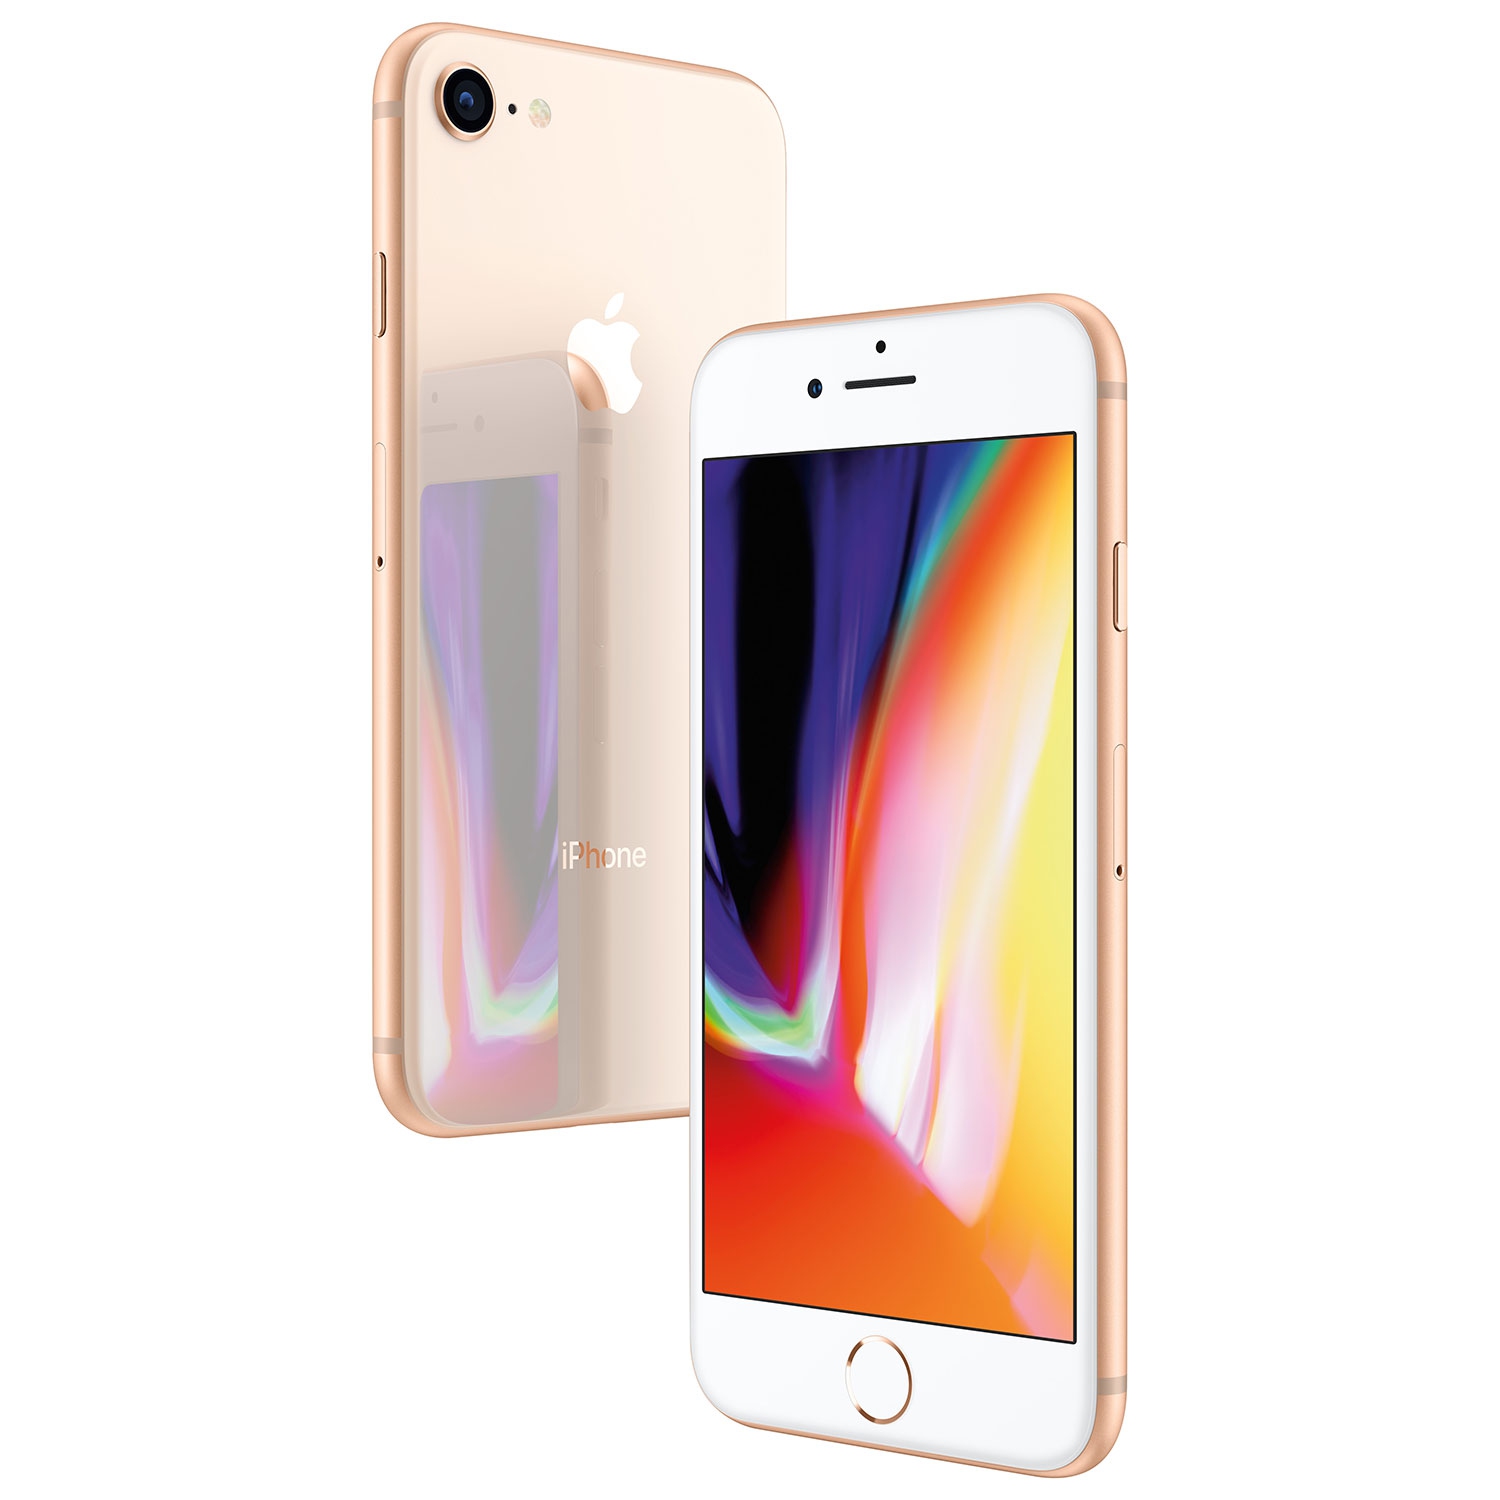 Refurbished (Good) - Apple iPhone 8 256GB Smartphone - Gold - Unlocked